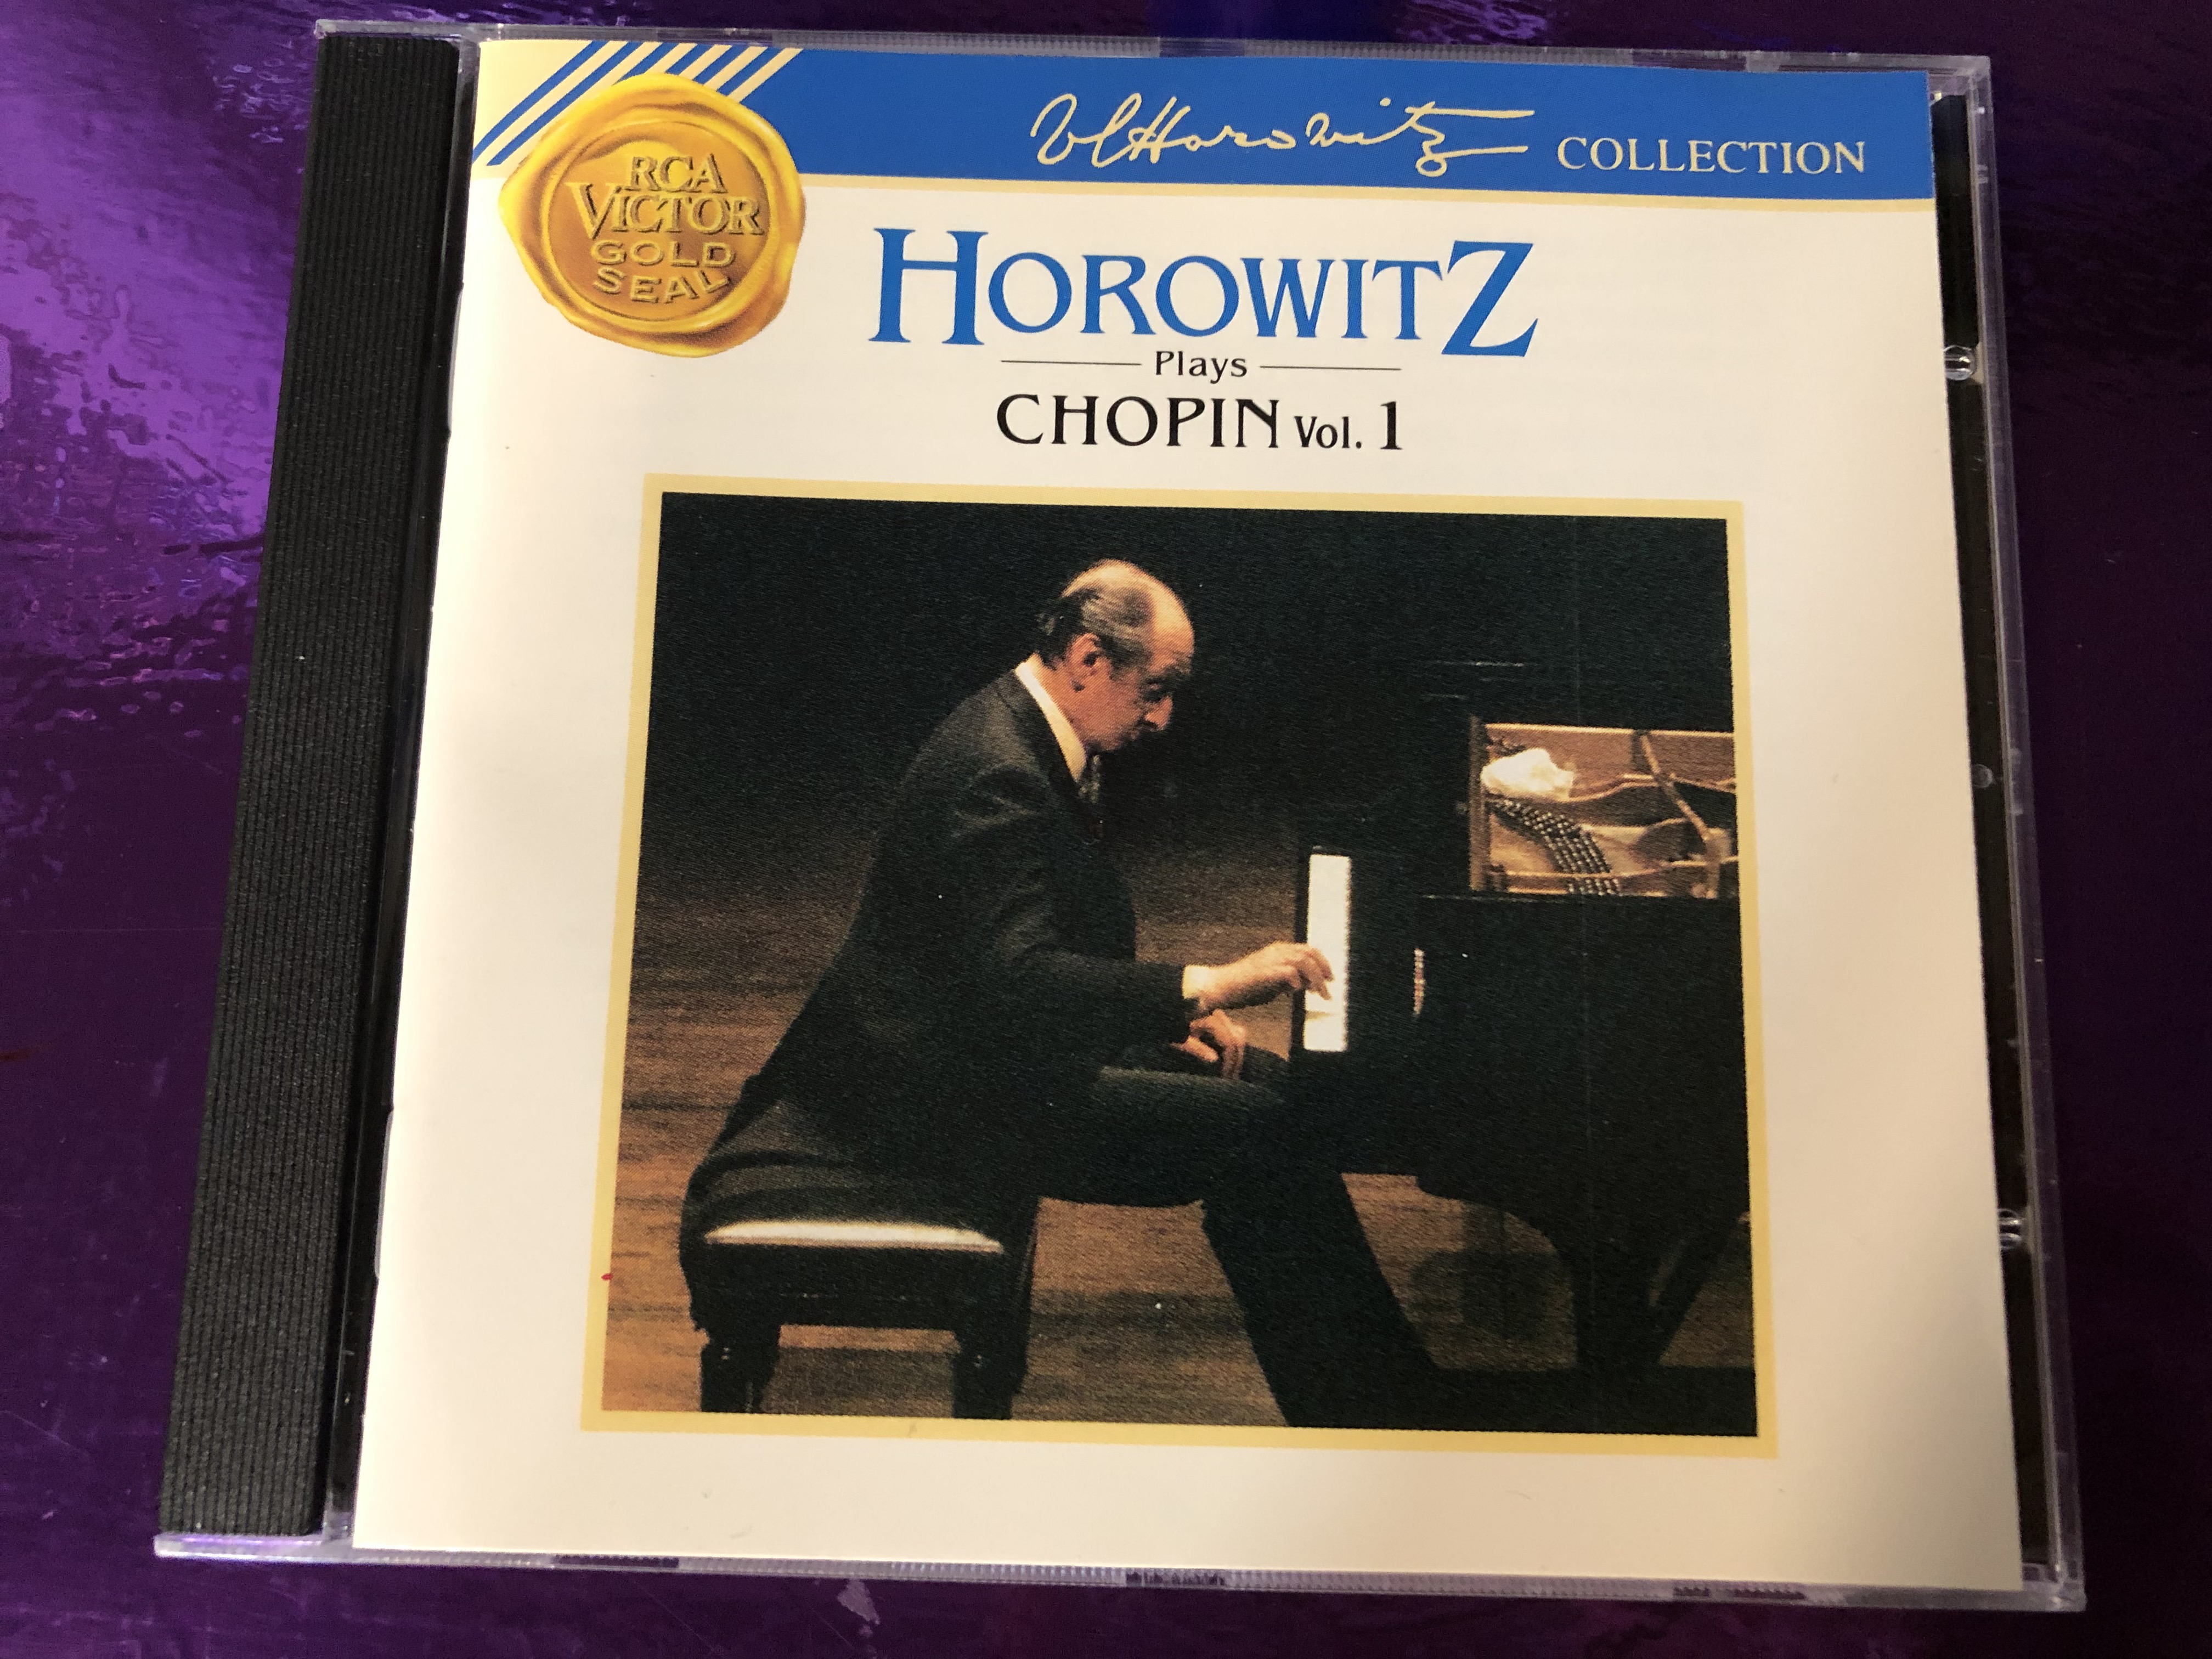 horowitz-plays-chopin-vol.-1-rca-victor-gold-seal-audio-cd-gd87752-1-.jpg